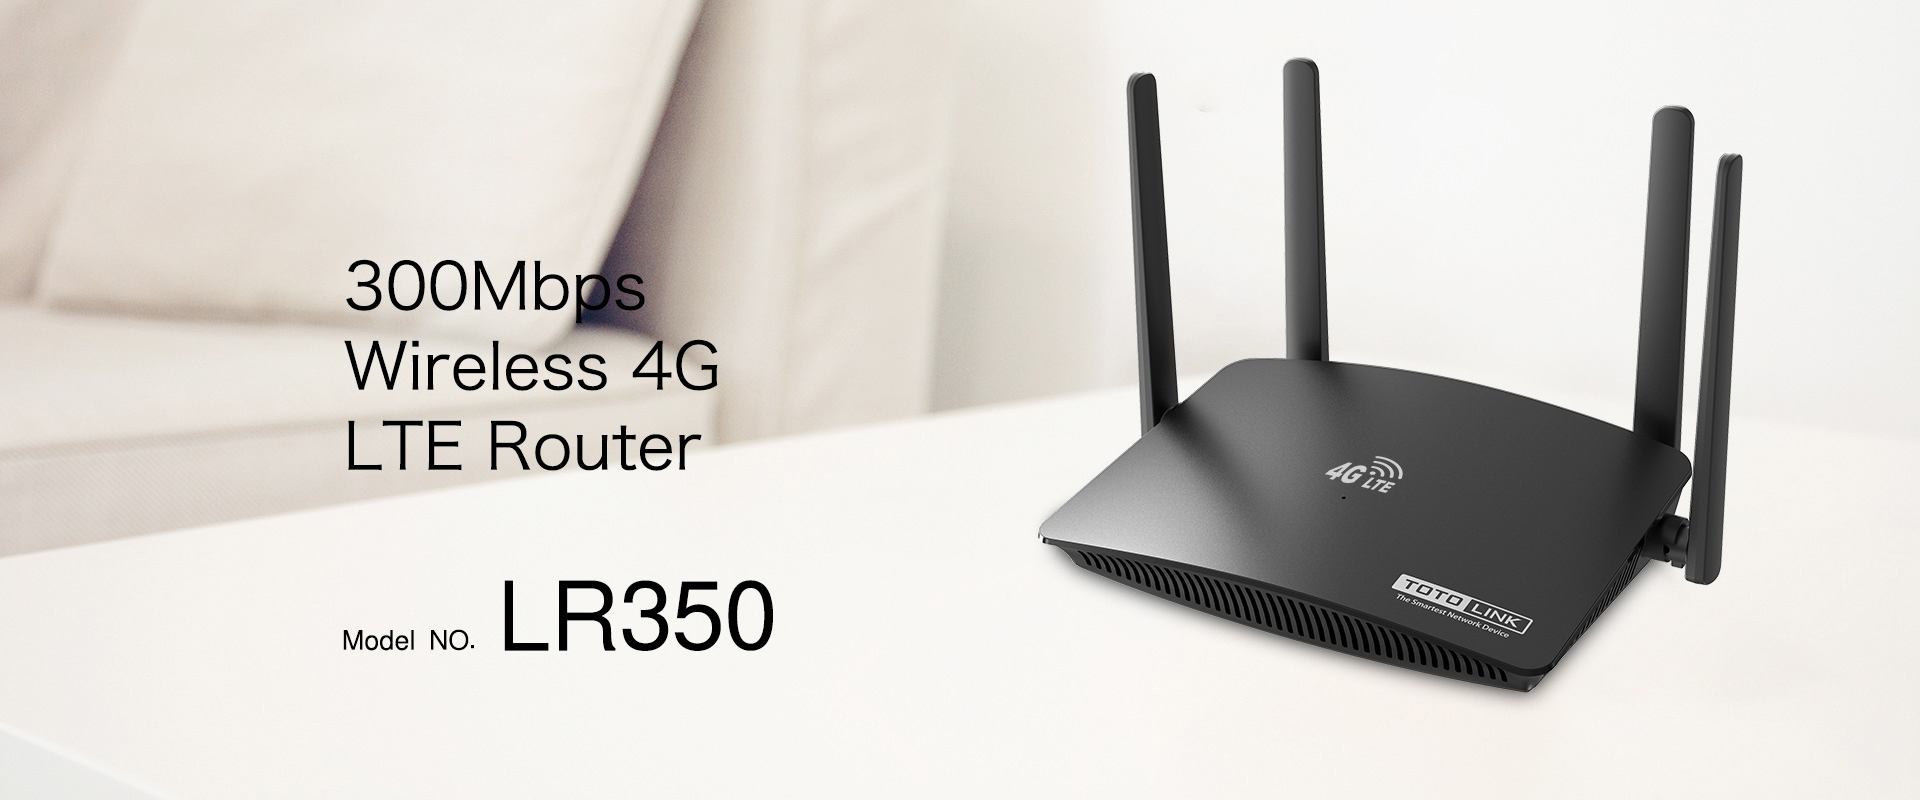 300Mbps Wireless 4G LTE Router Dubai